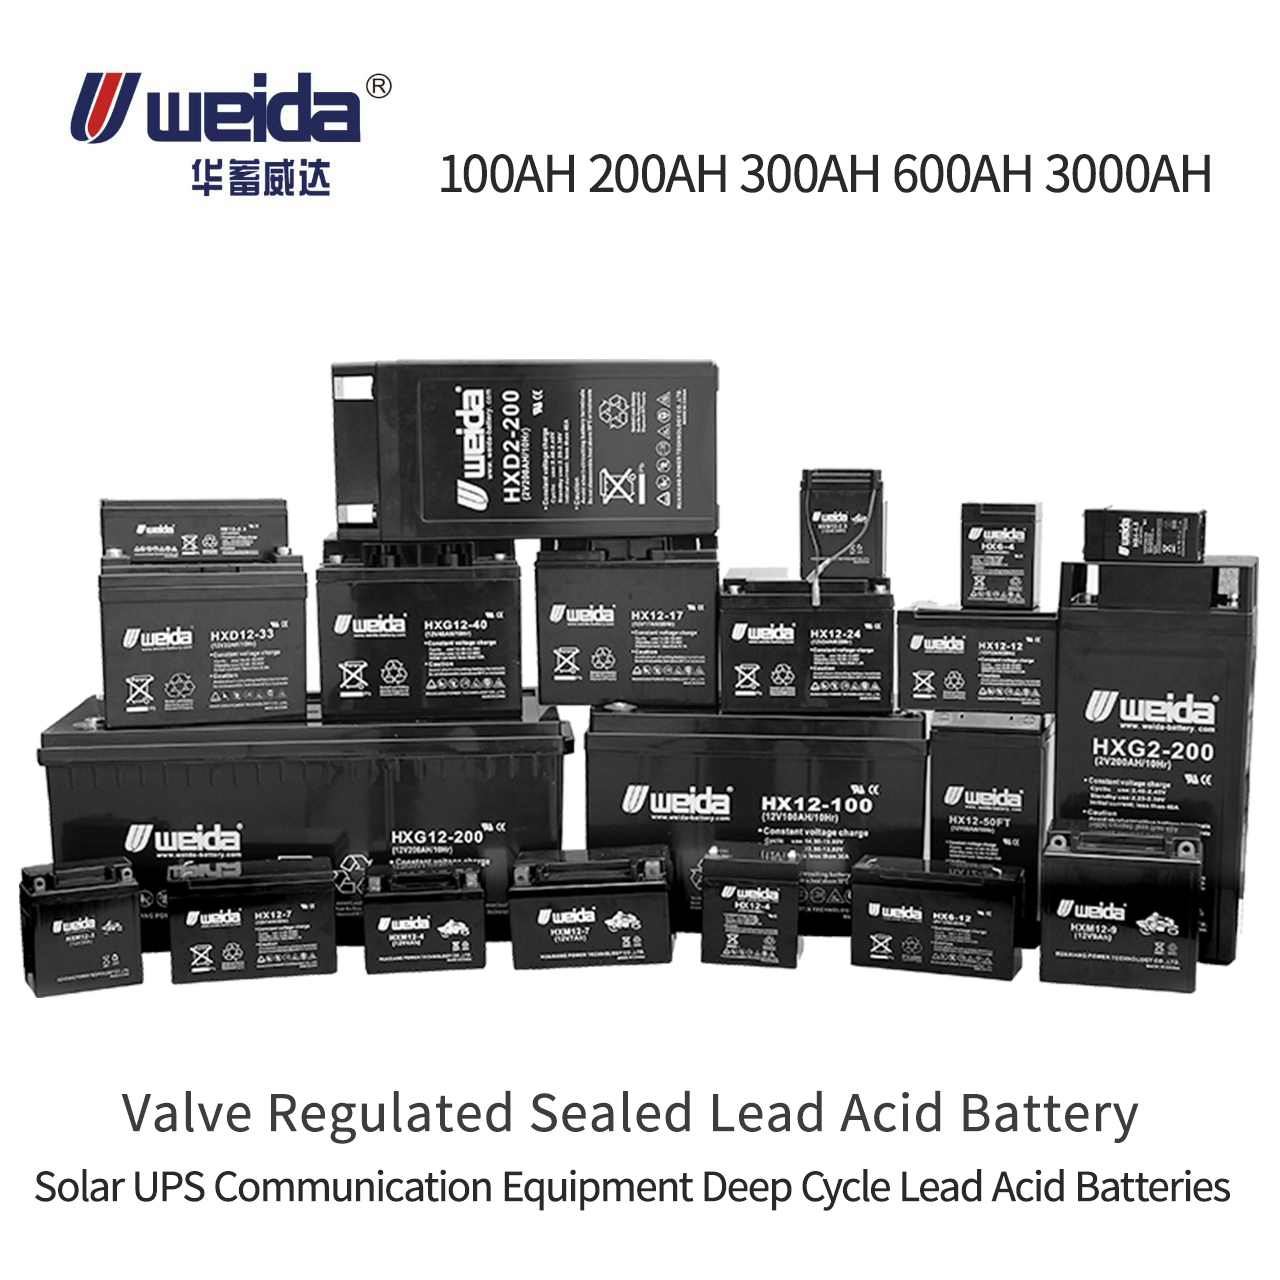 Weida® UPS sla bateria agm válvula regulada de chumbo ácido 100ah 200ah bateria de chumbo ácido de ciclo profundo bateria solar de chumbo ácido